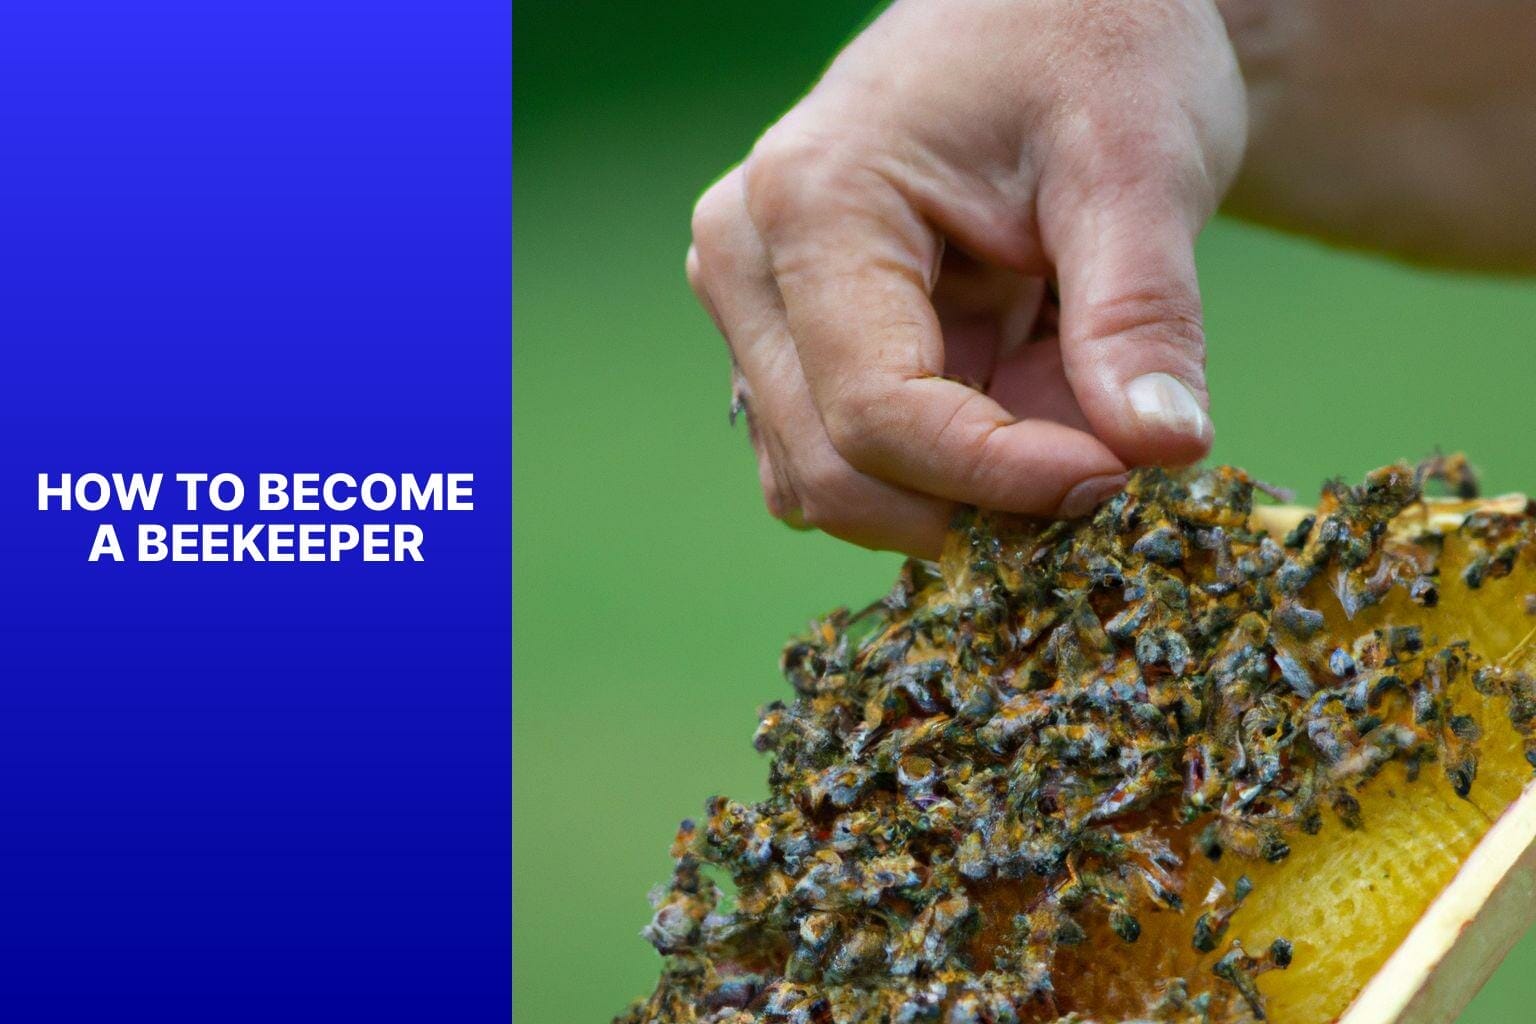 Beekeeper's Guide: Become a Beekeeper